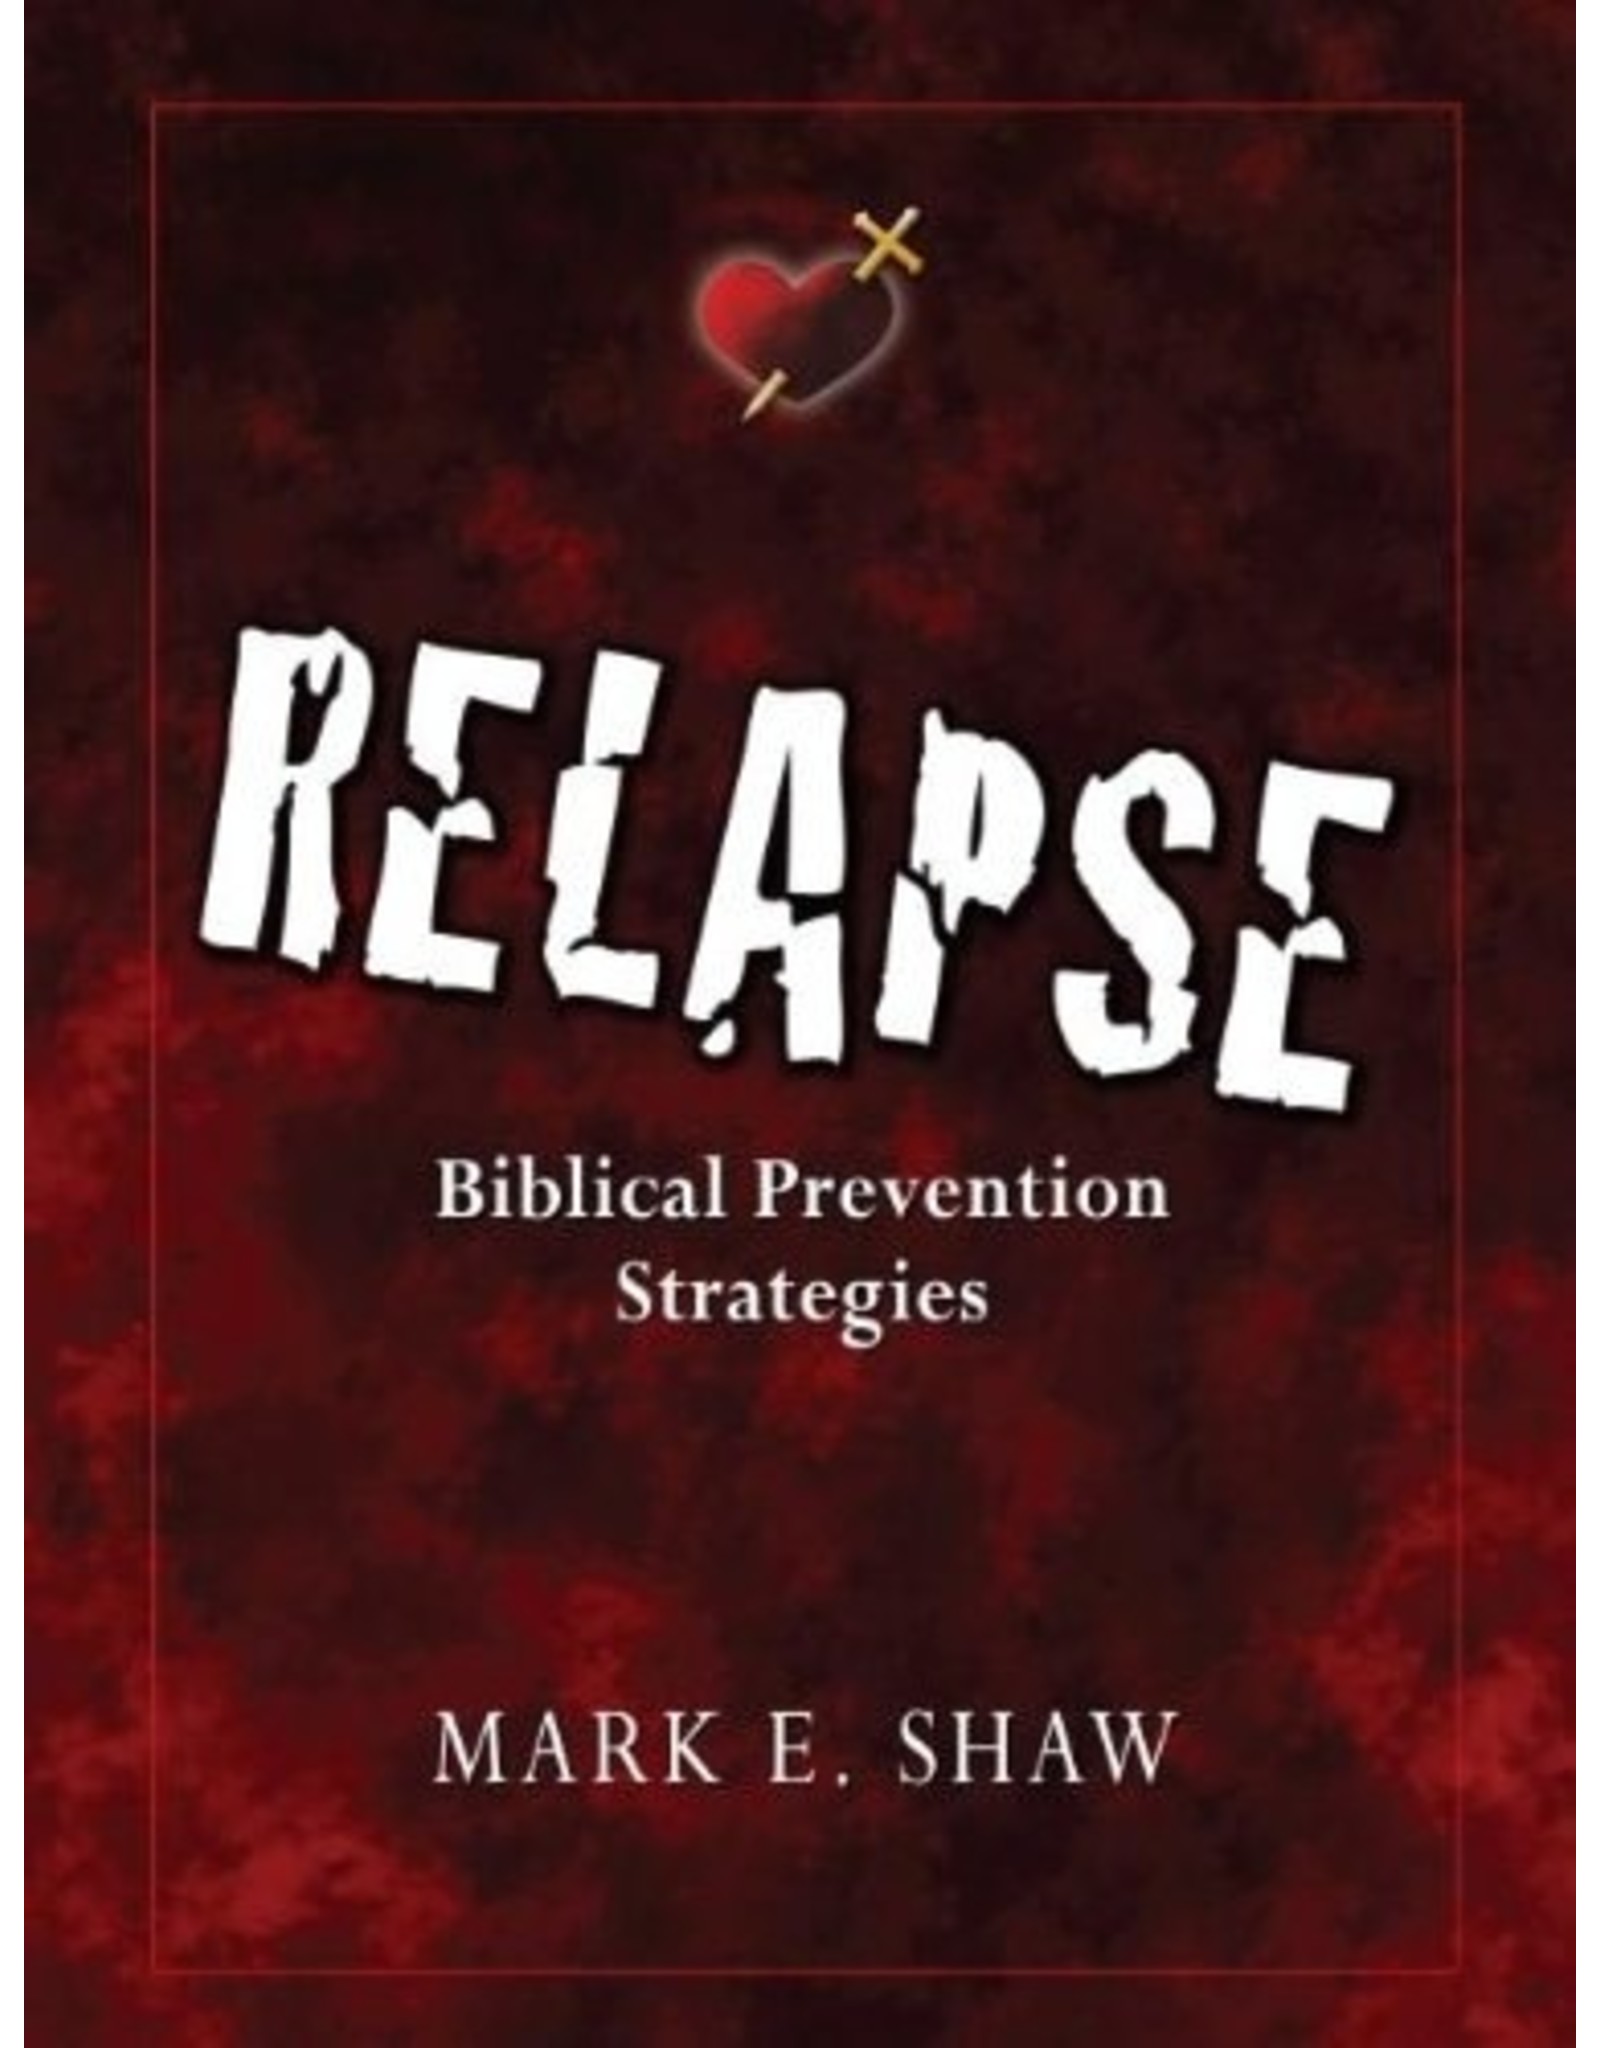 Focus Publishing Relapse: Biblical Prevention Strategies